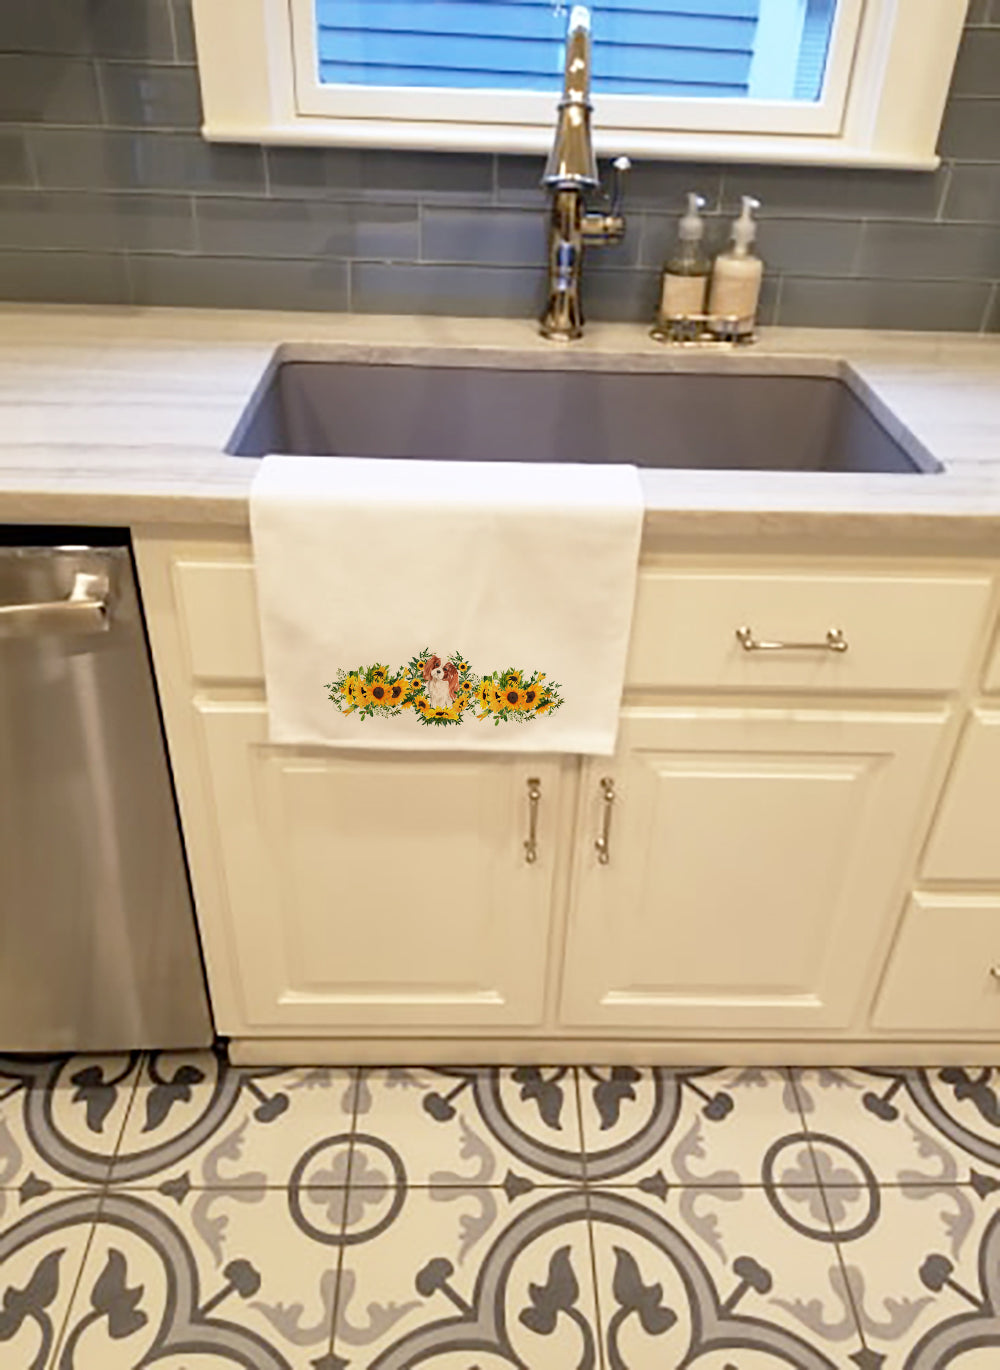 Buy this Blenheim Cavalier Spaniel in Sunflowers White Kitchen Towel Set of 2